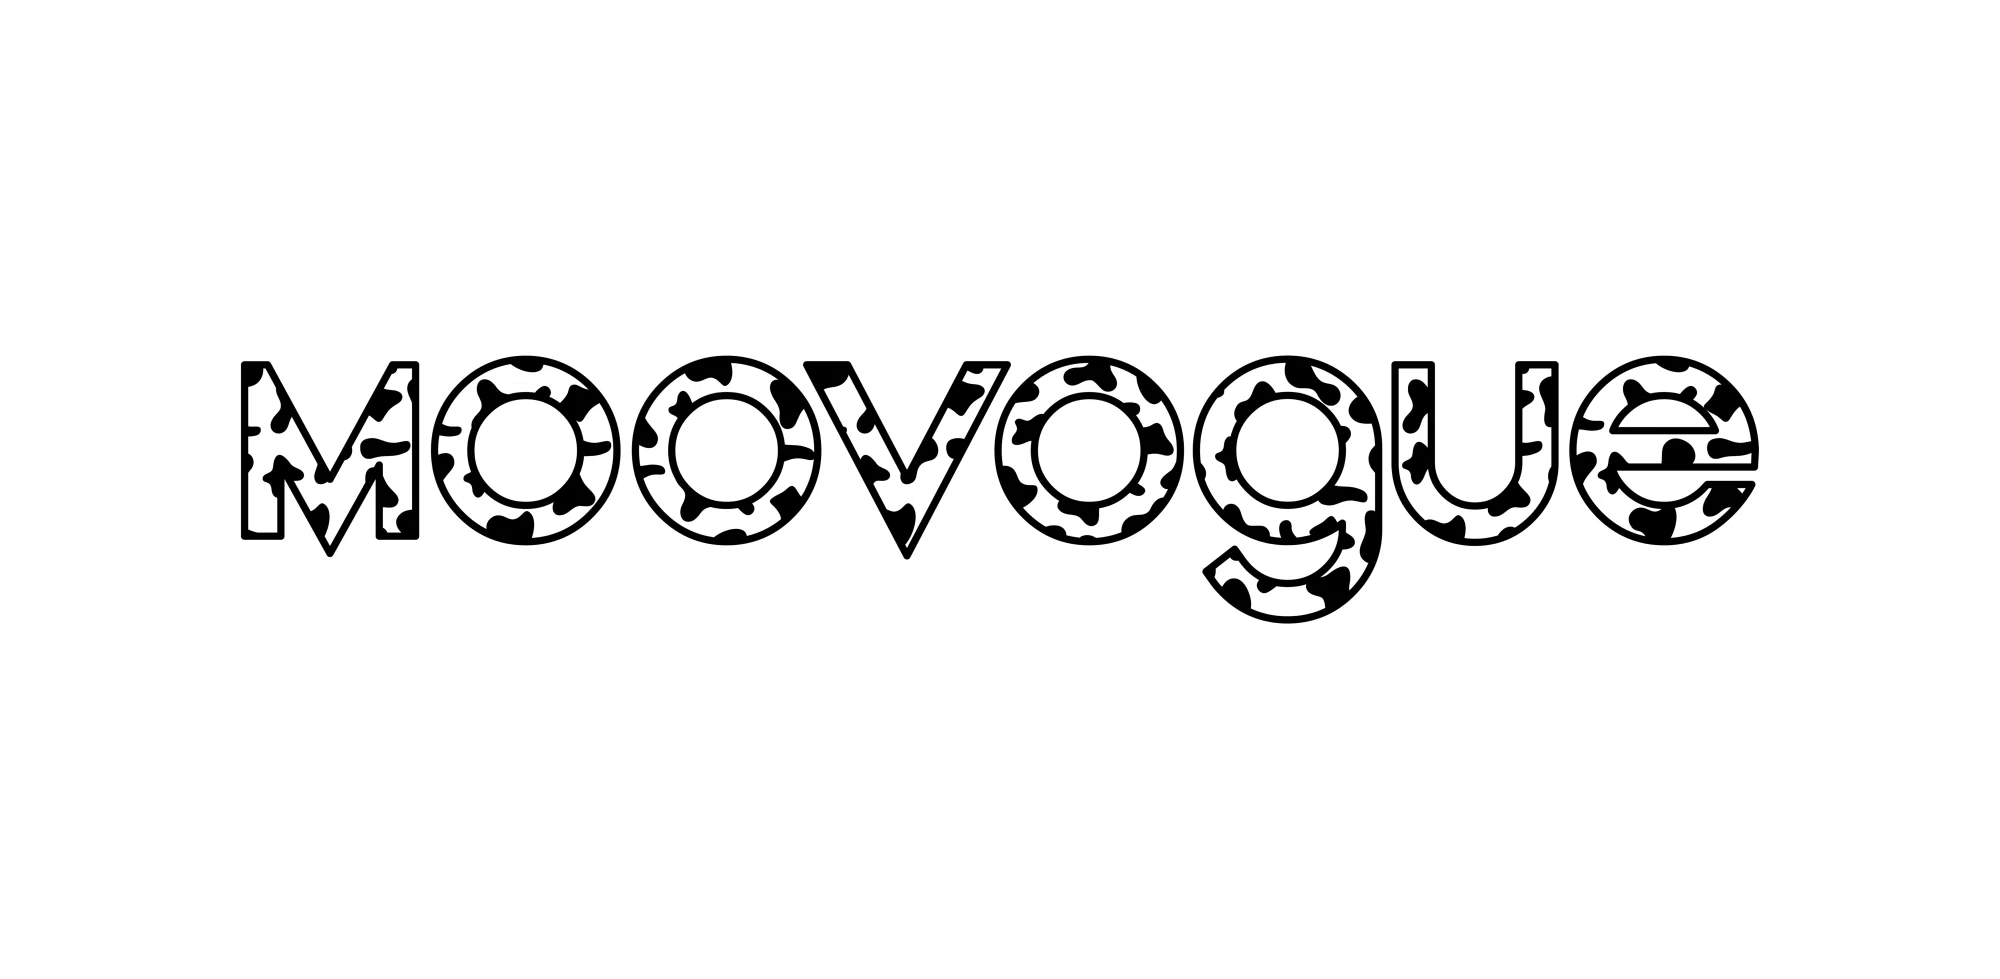 Get an Extra 15% Off (Sitewide) at Moovogue.com @ MOOVOGUE